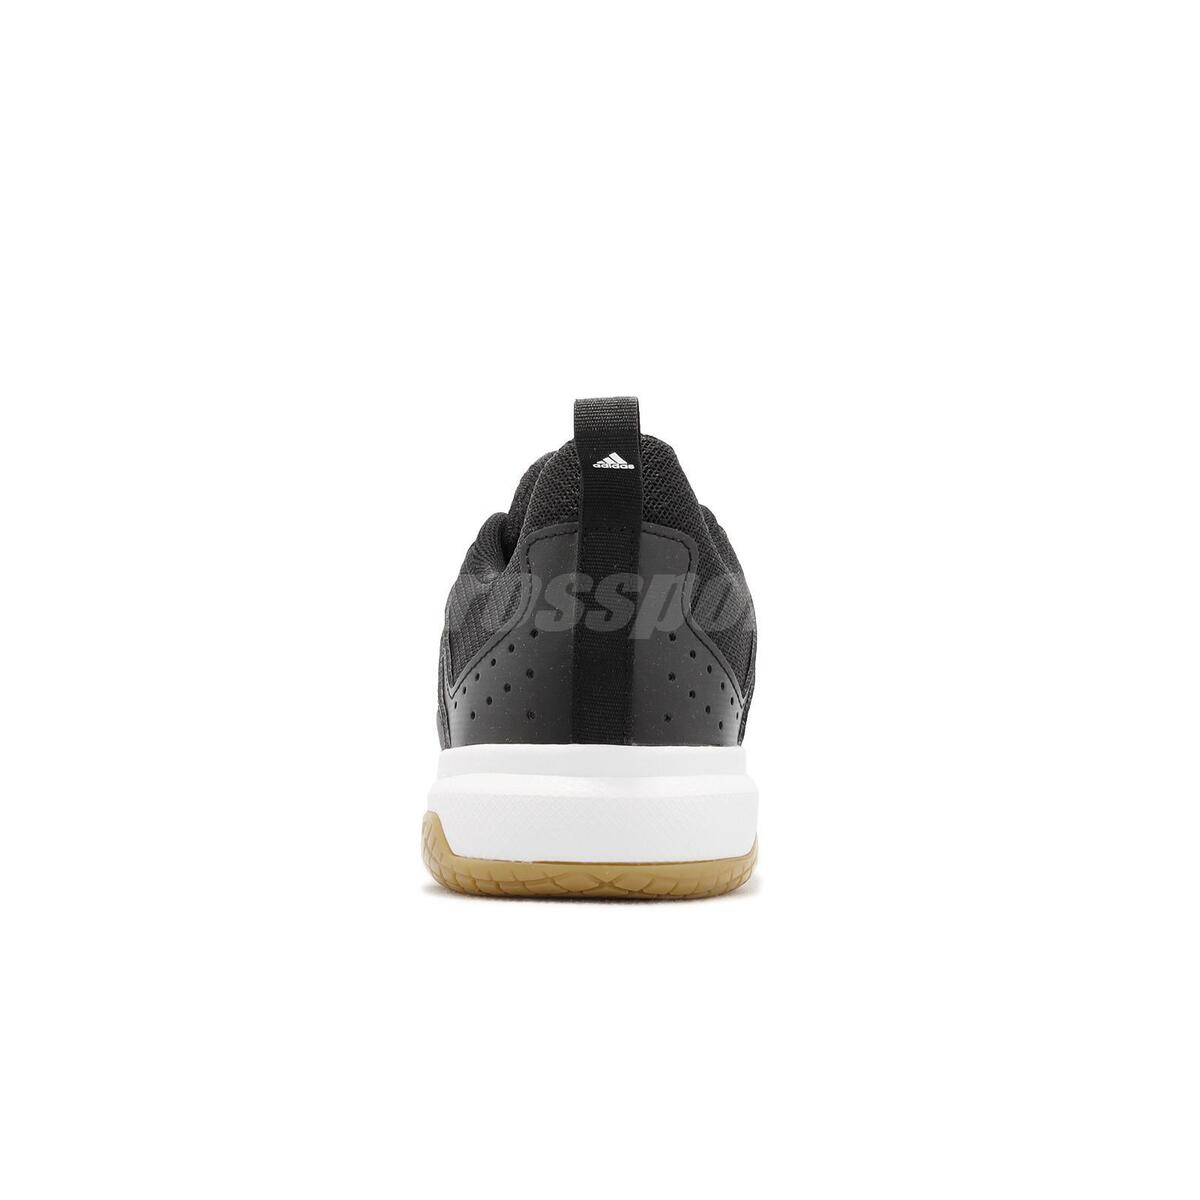 adidas Ligra 7 M Black White Gum Men Unisex Badminton Shoes Sneakers FZ4658  | eBay